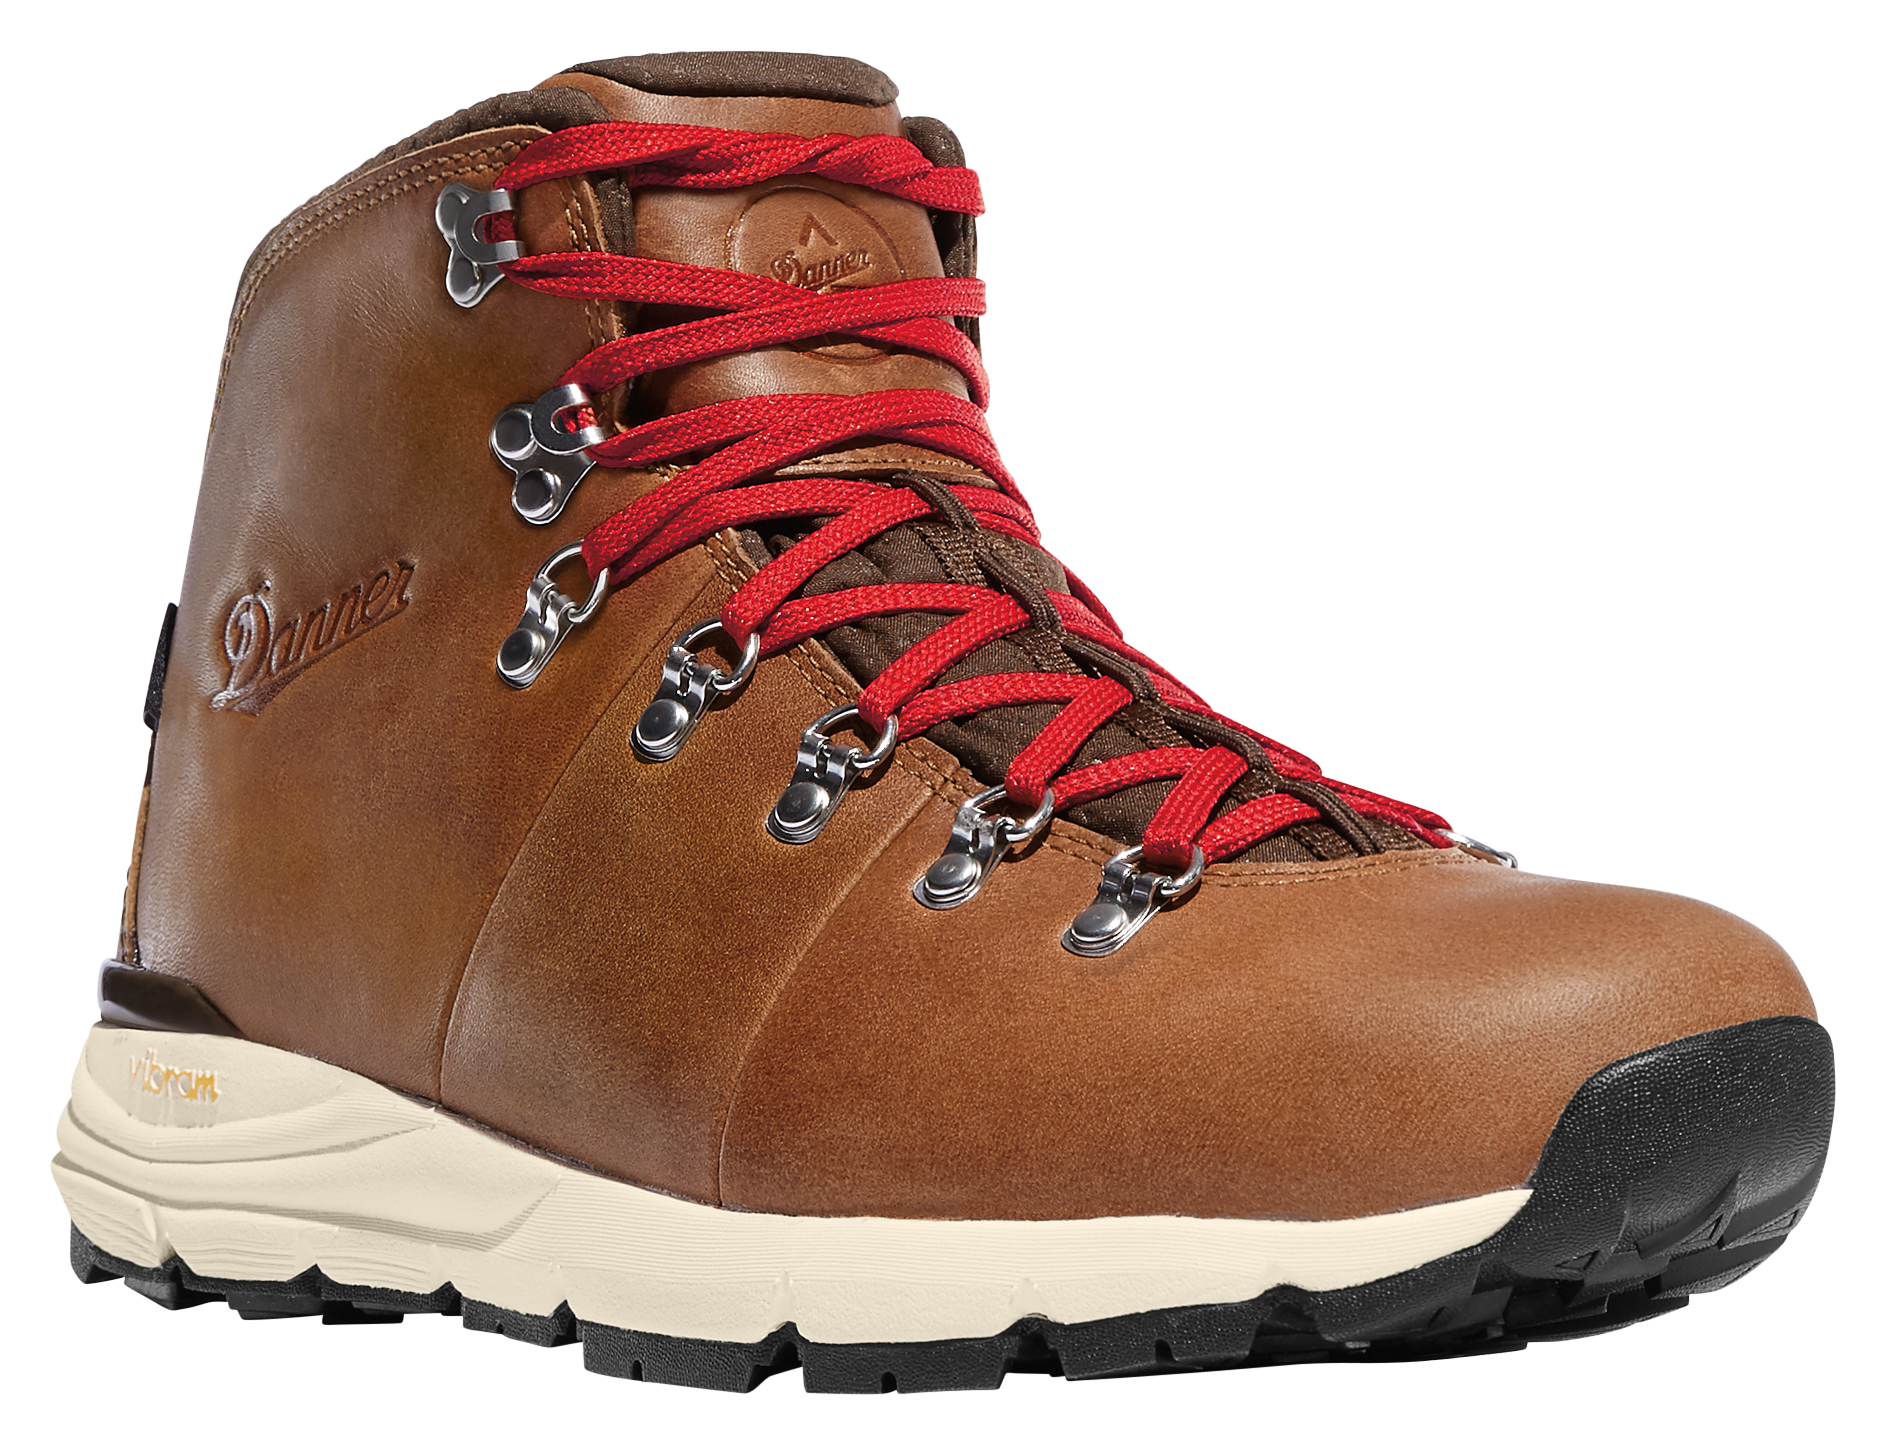 Danner Mountain 600 Waterproof Hiking Boots for Men - Saddle Tan - 12M